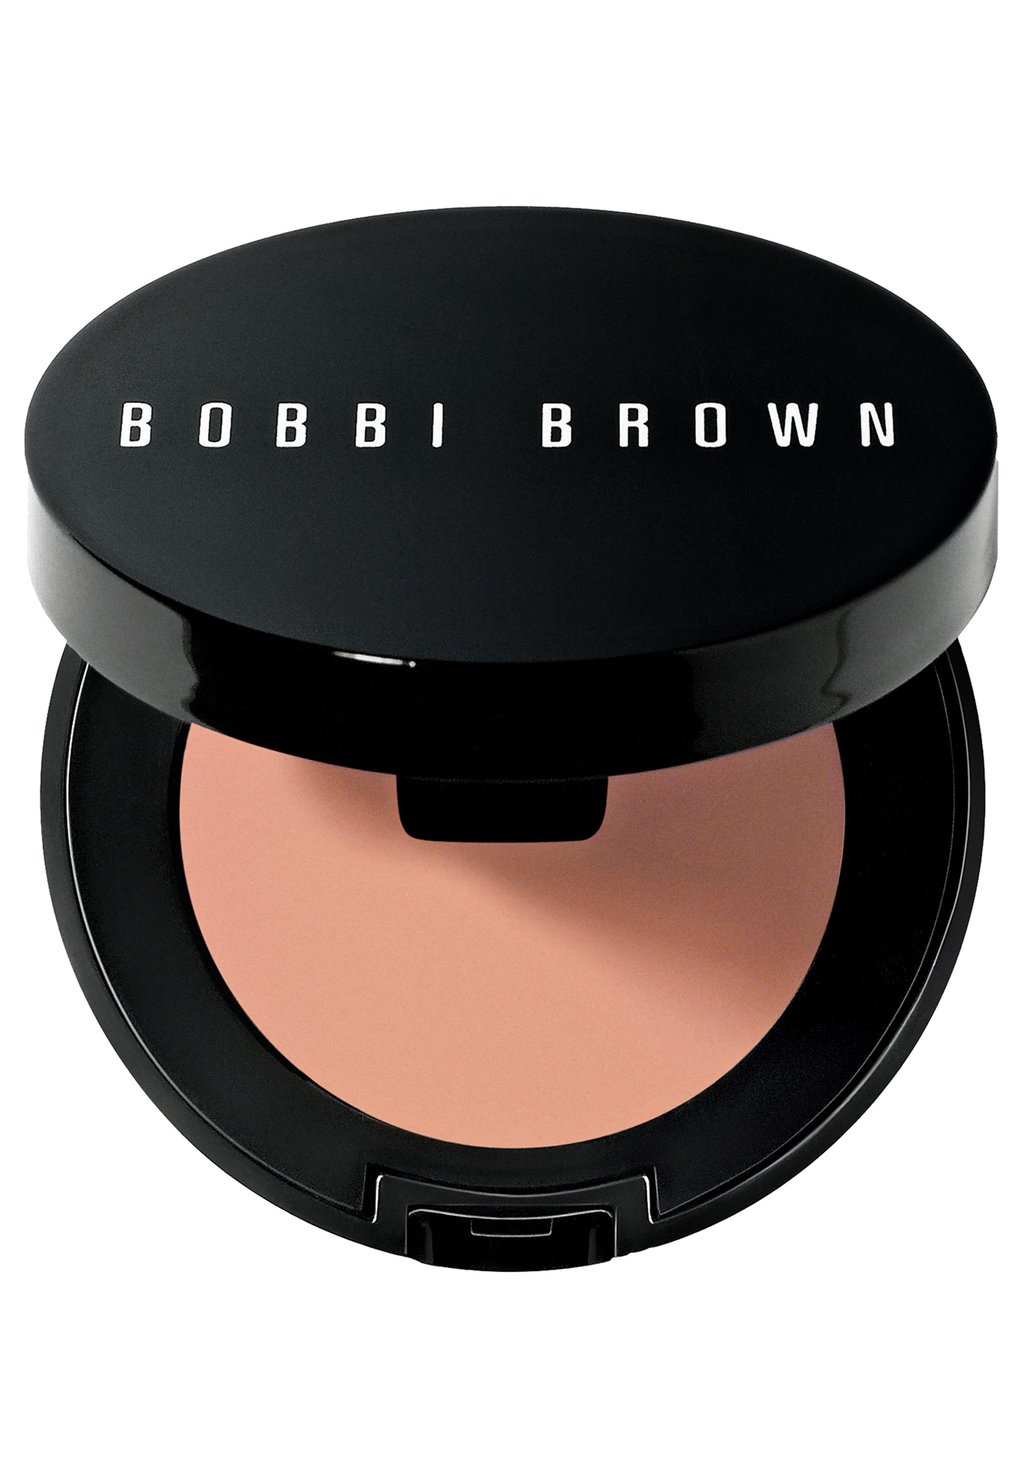 Корректор Corrector Bobbi Brown, цвет light to medium bisque консилер corrector bobbi brown цвет light bisque